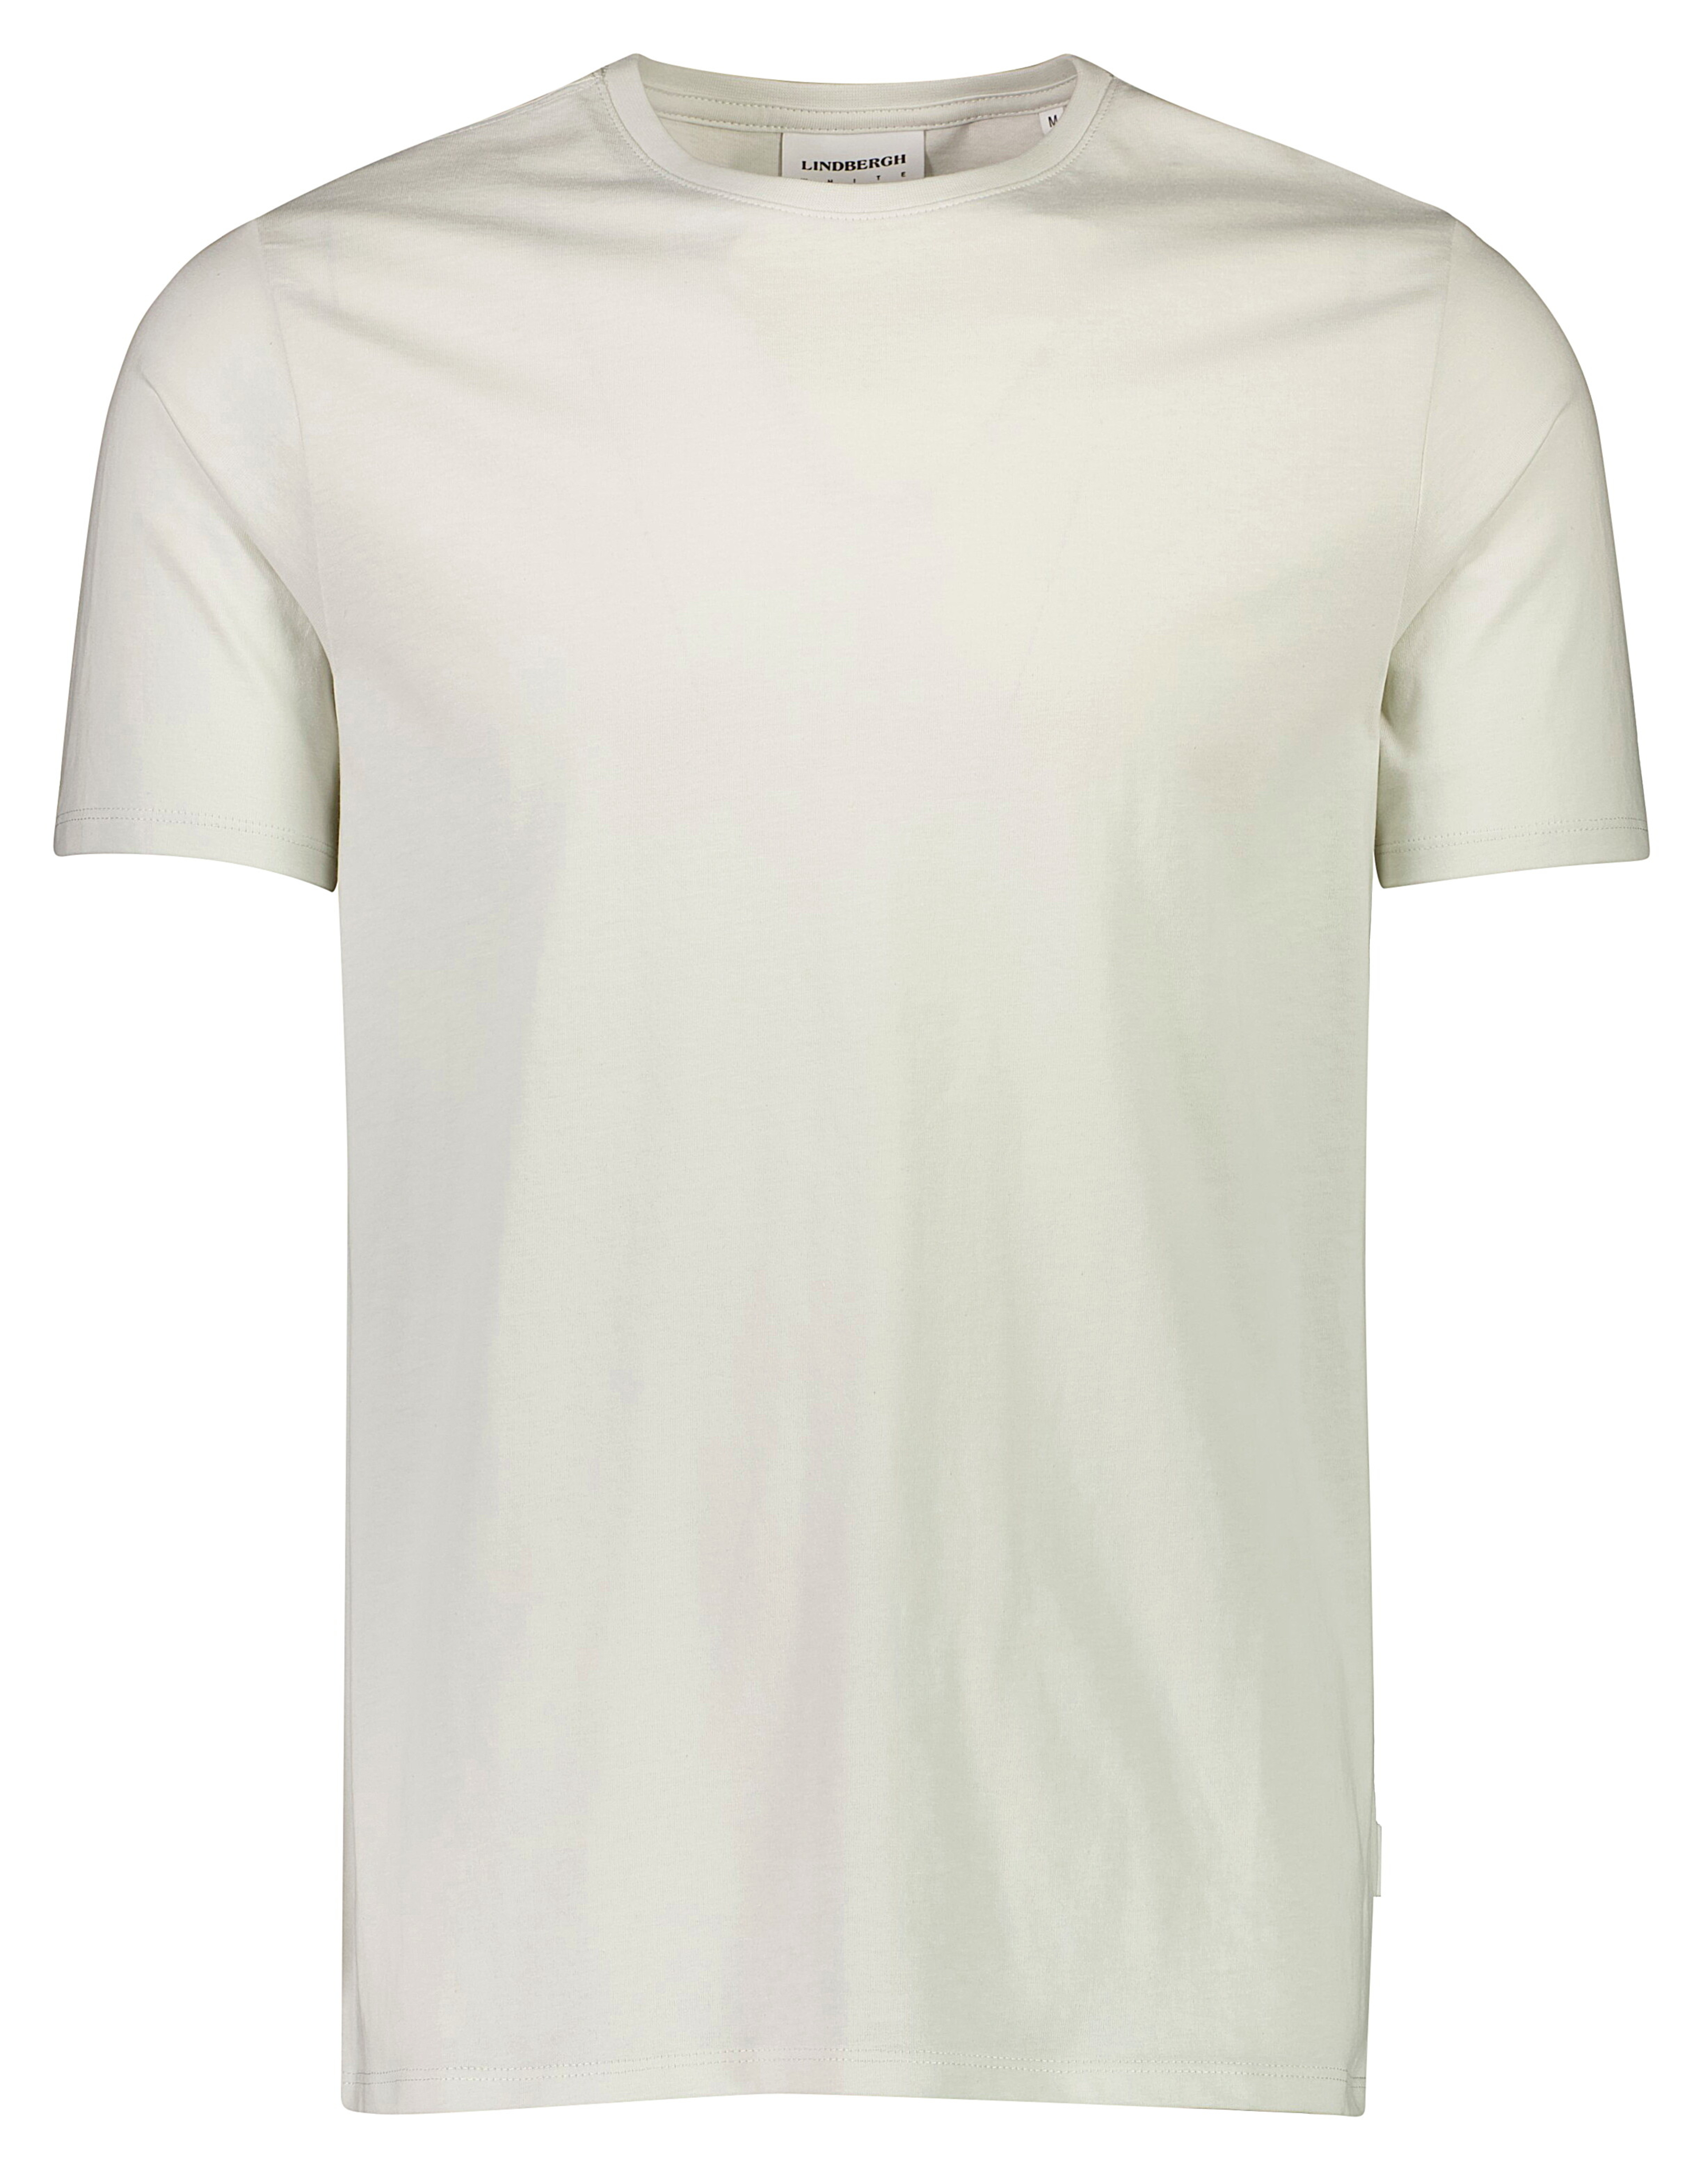 Lindbergh T-Shirt grau / lt grey